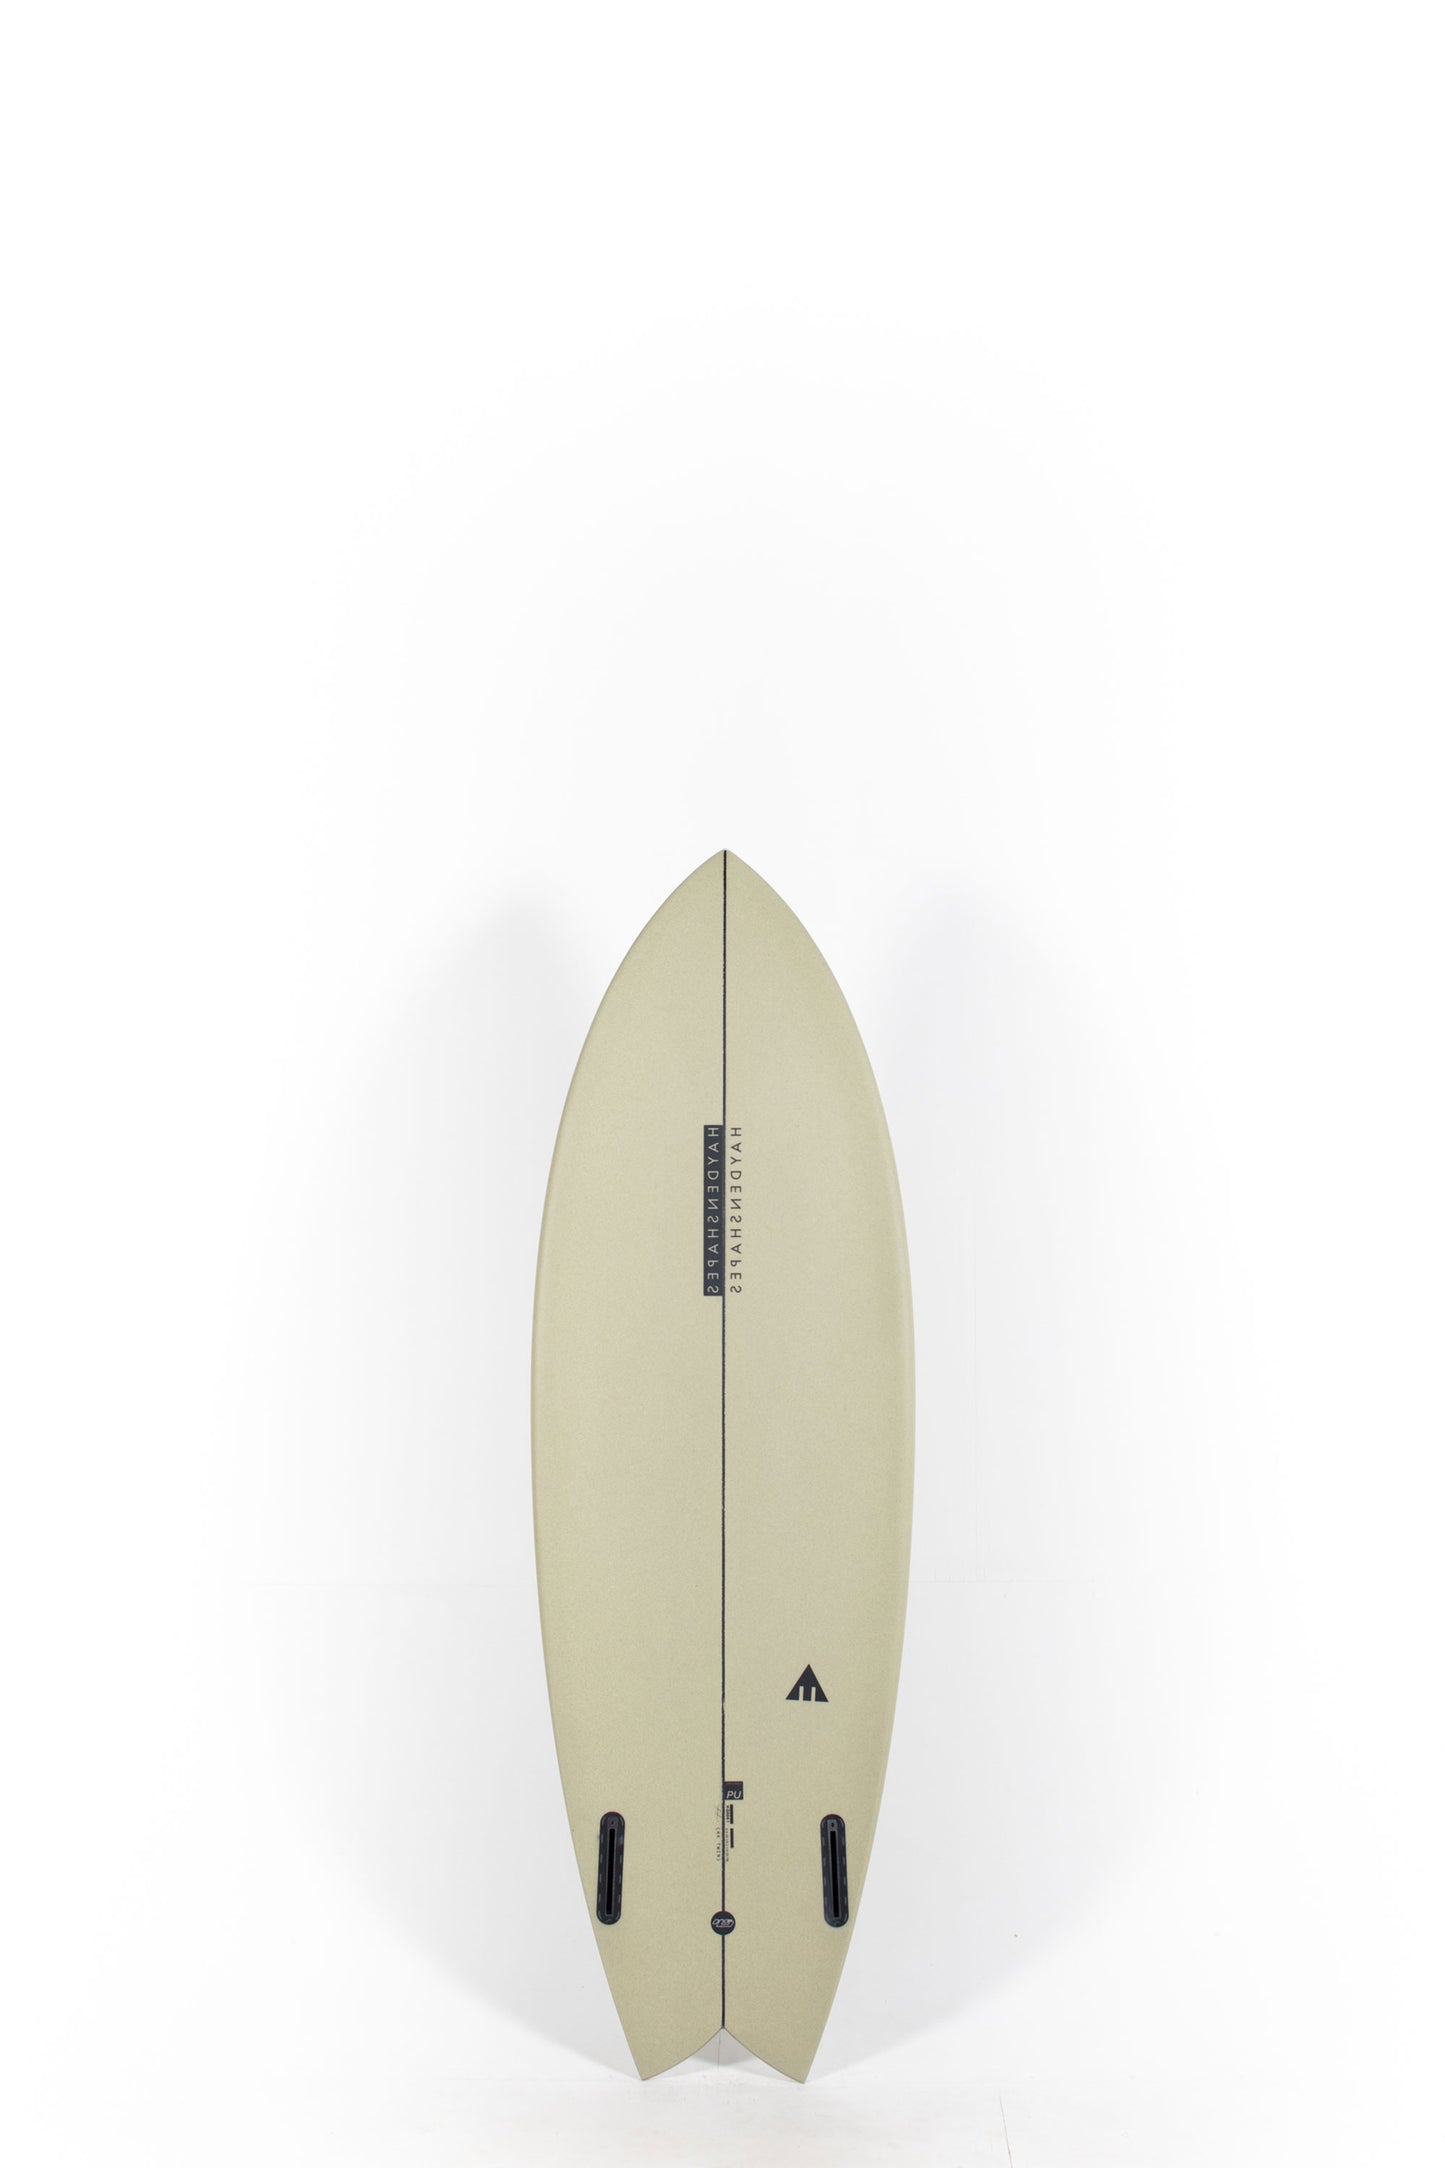 Pukas Surf Shop - HaydenShapes Surfboard - HYPTO KRYPTO TWIN PU - 5'4" X 19 1/2" X 2 1/4" - 25.79L